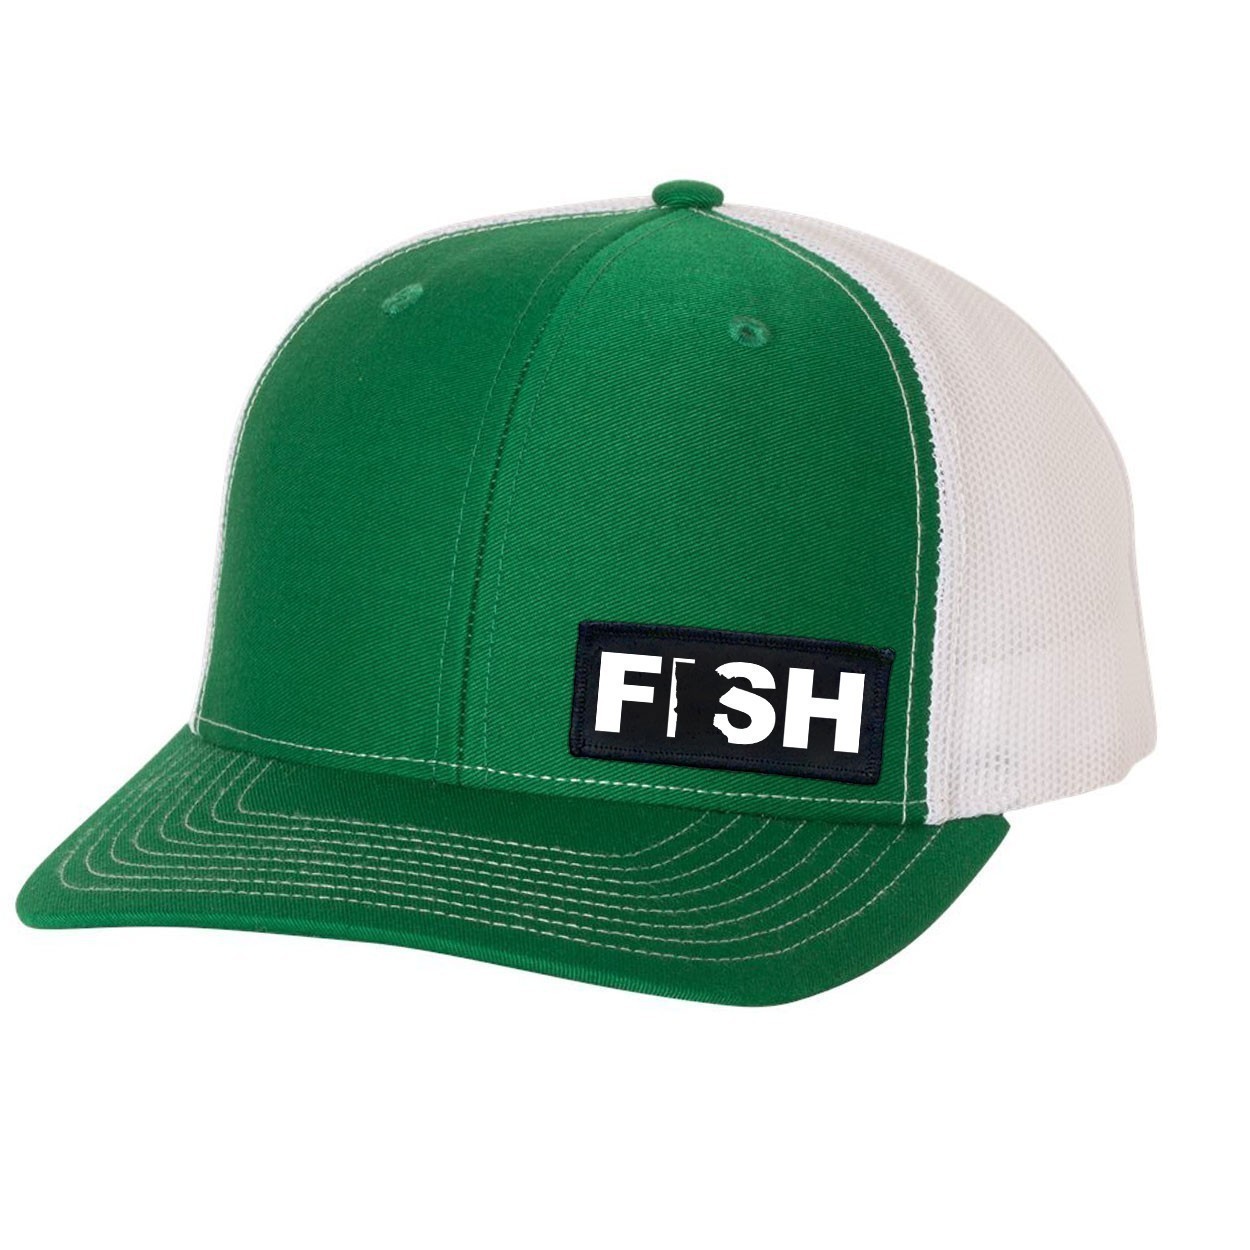 Fish Minnesota Night Out Woven Patch Snapback Trucker Hat Green/White (White Logo)